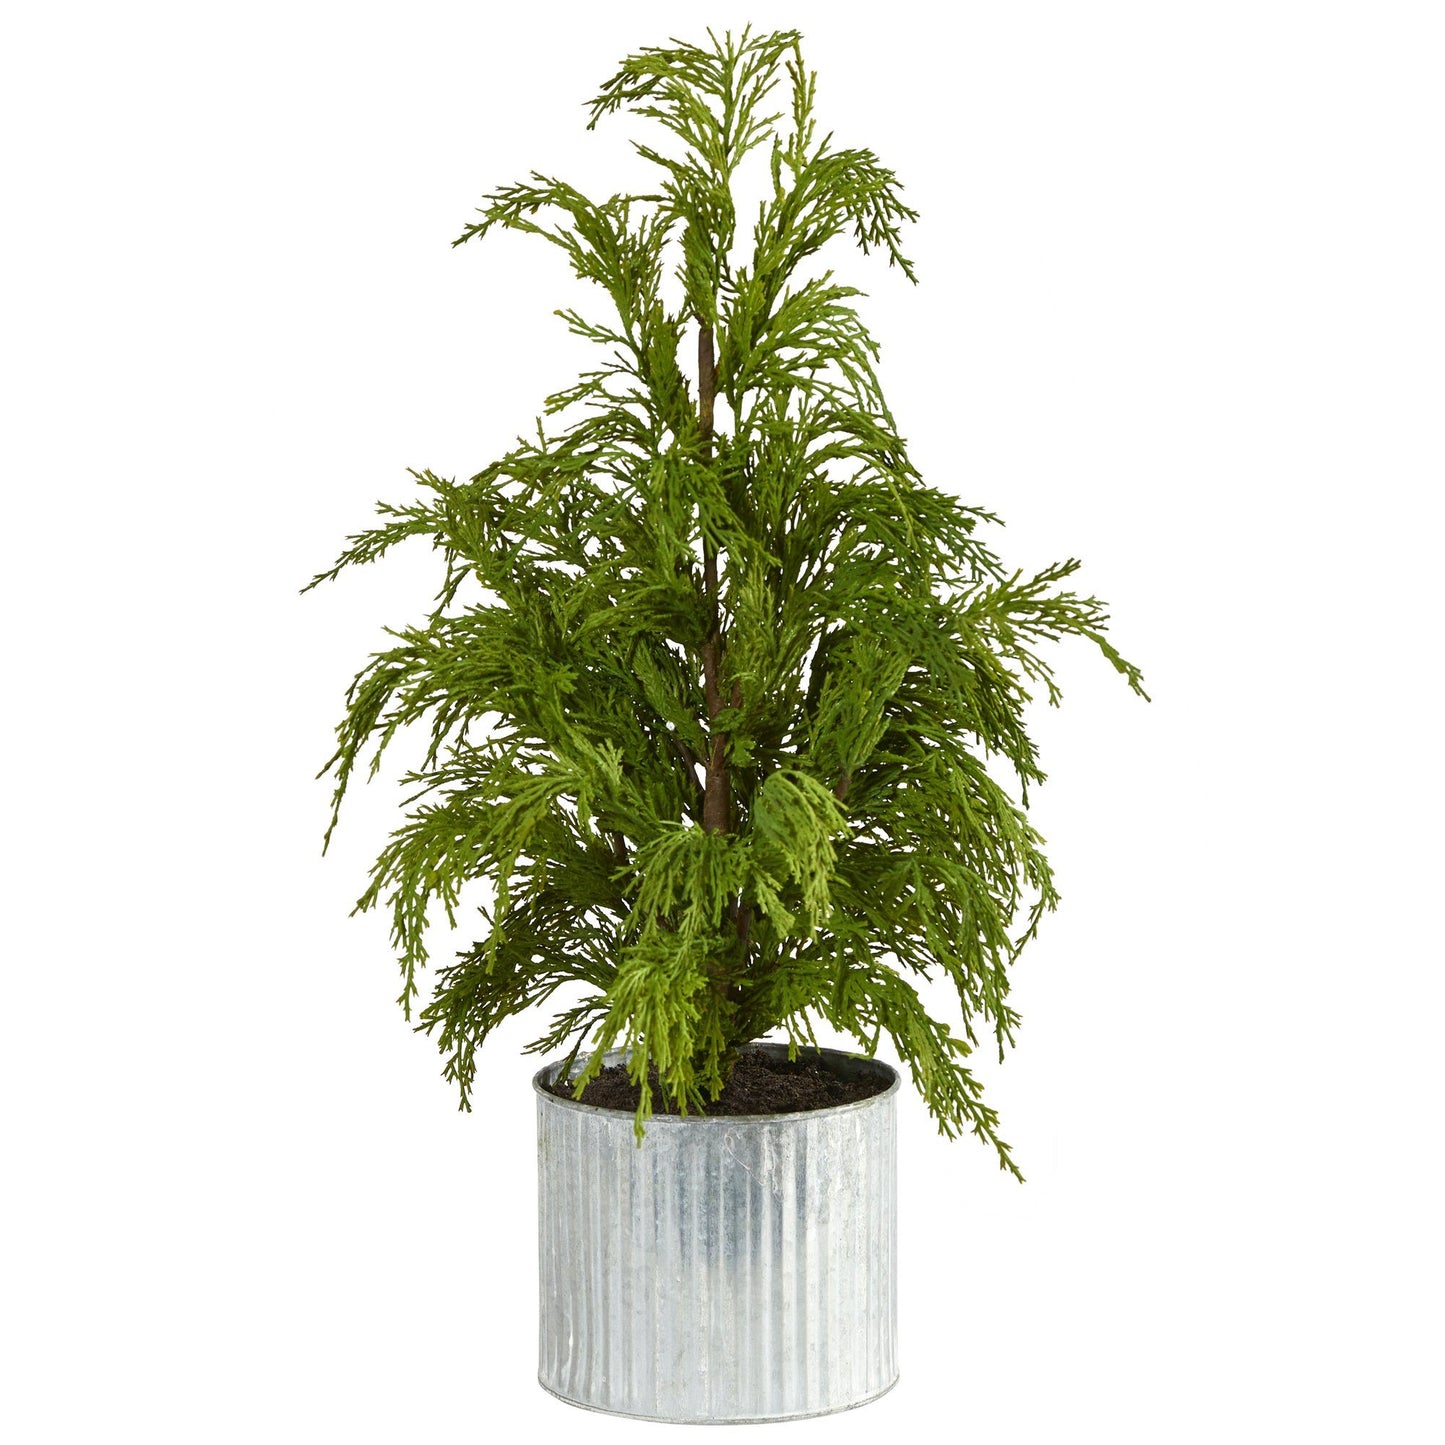 20” Cedar Pine “Natural Look” Artificial Tree in Decorative Planter ...